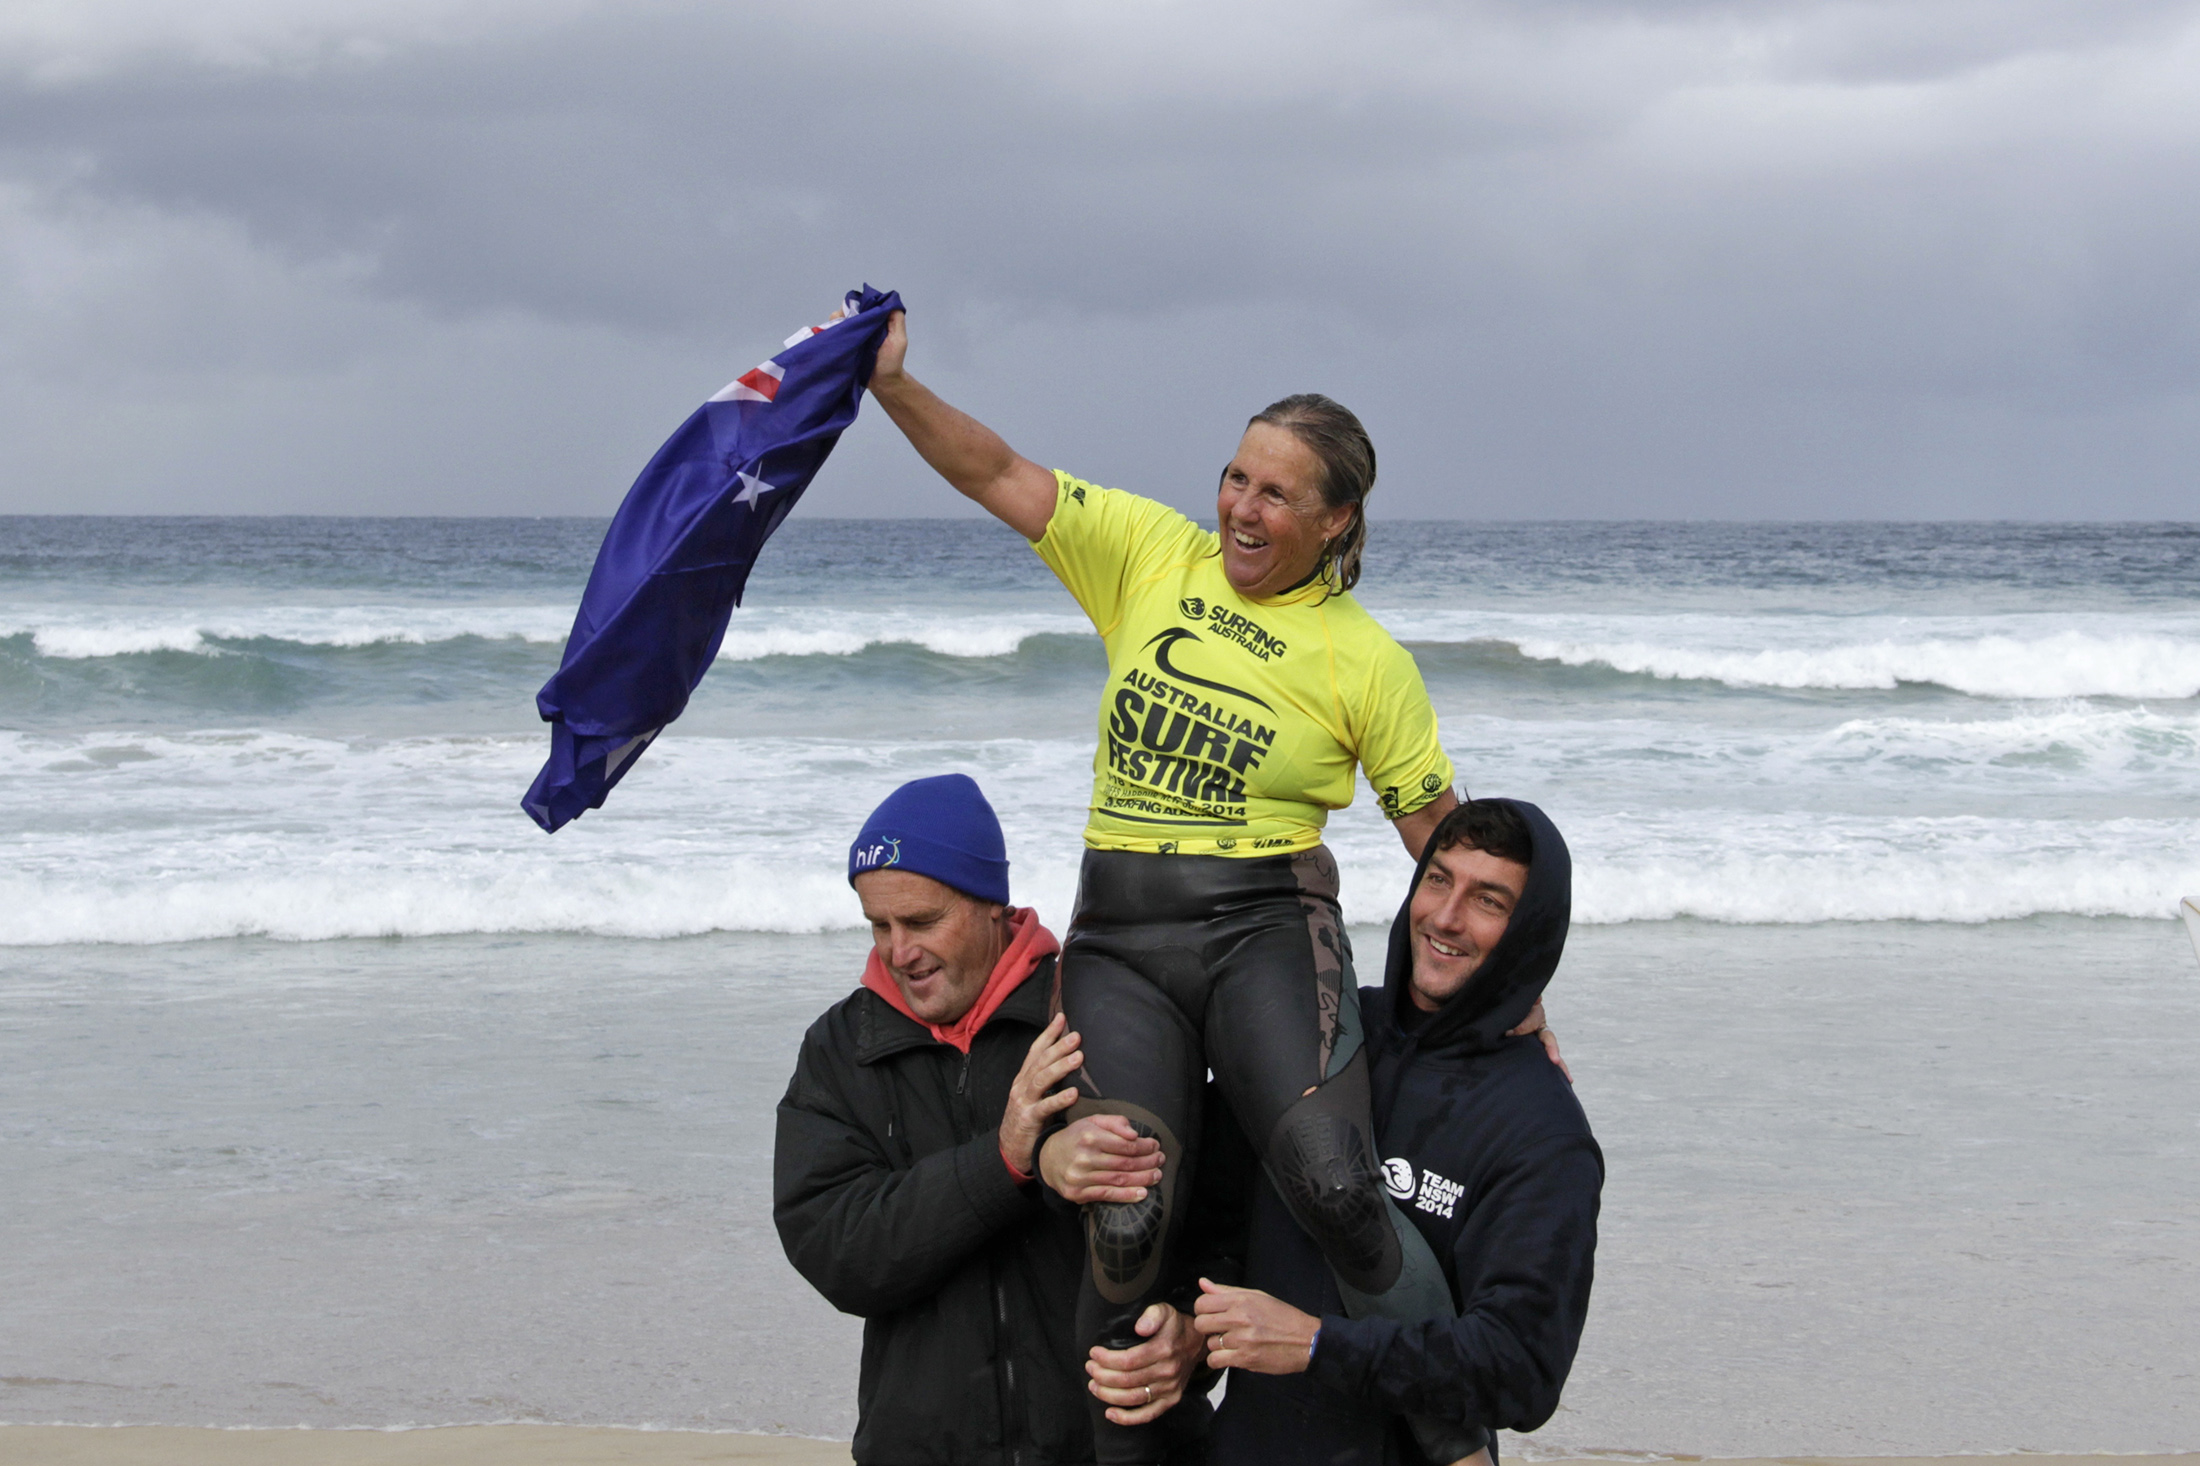 Sandra English Photo: Surfing Australia/Smith